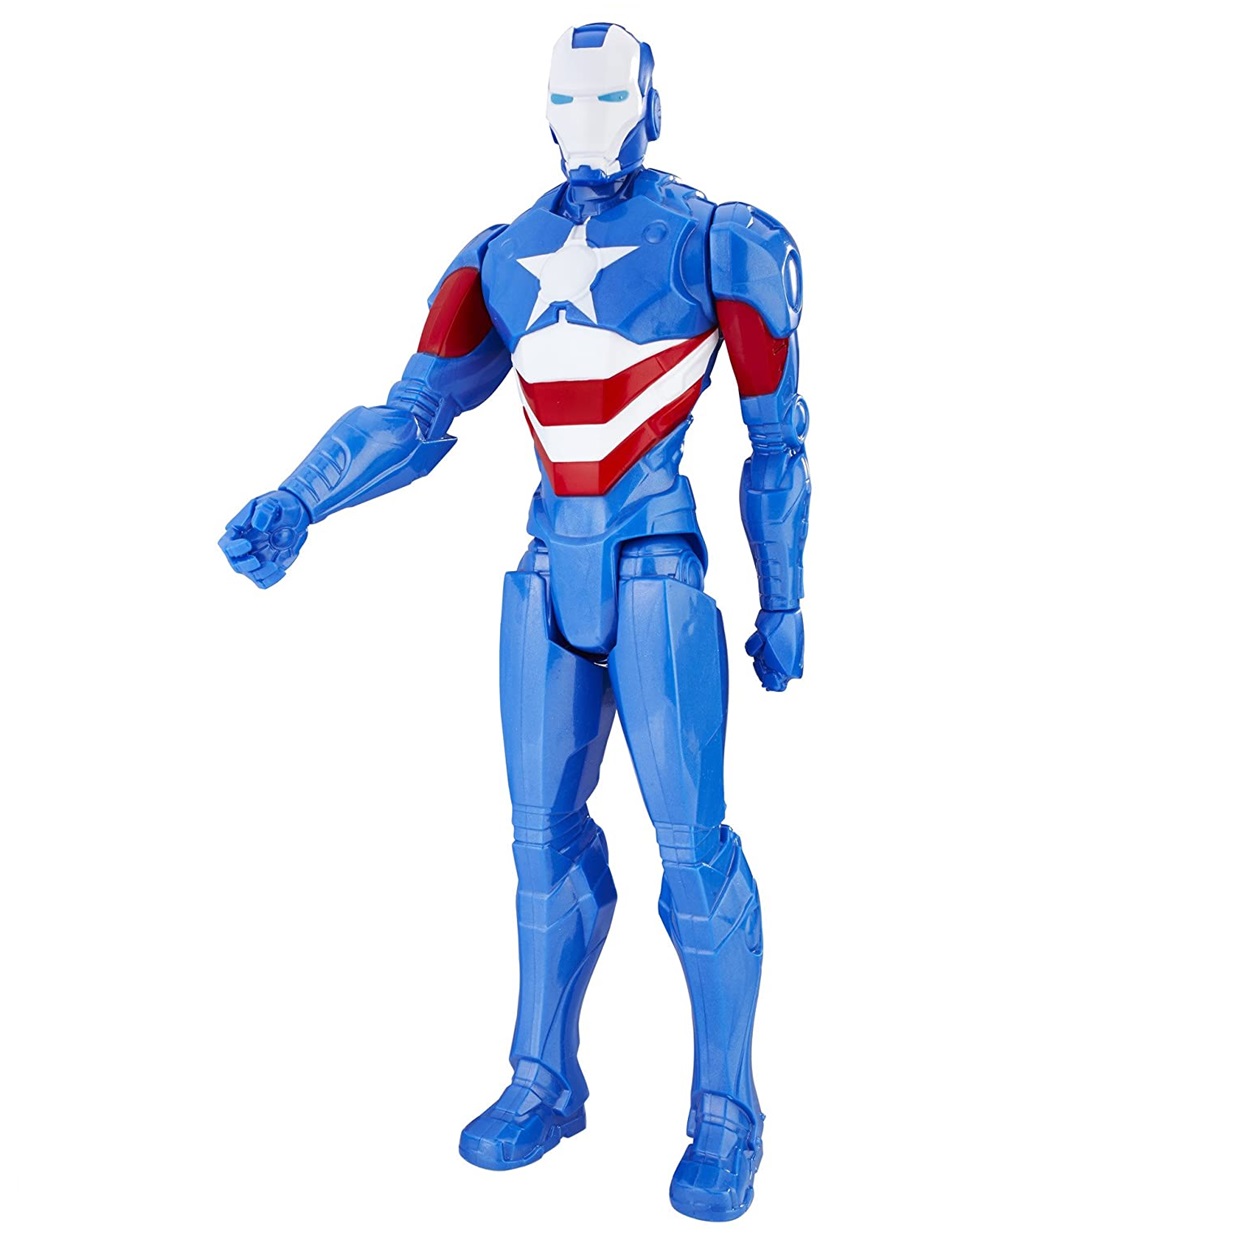 Iron Patriot Figura Avengers Titan Hero Series 12 Pulgadas 